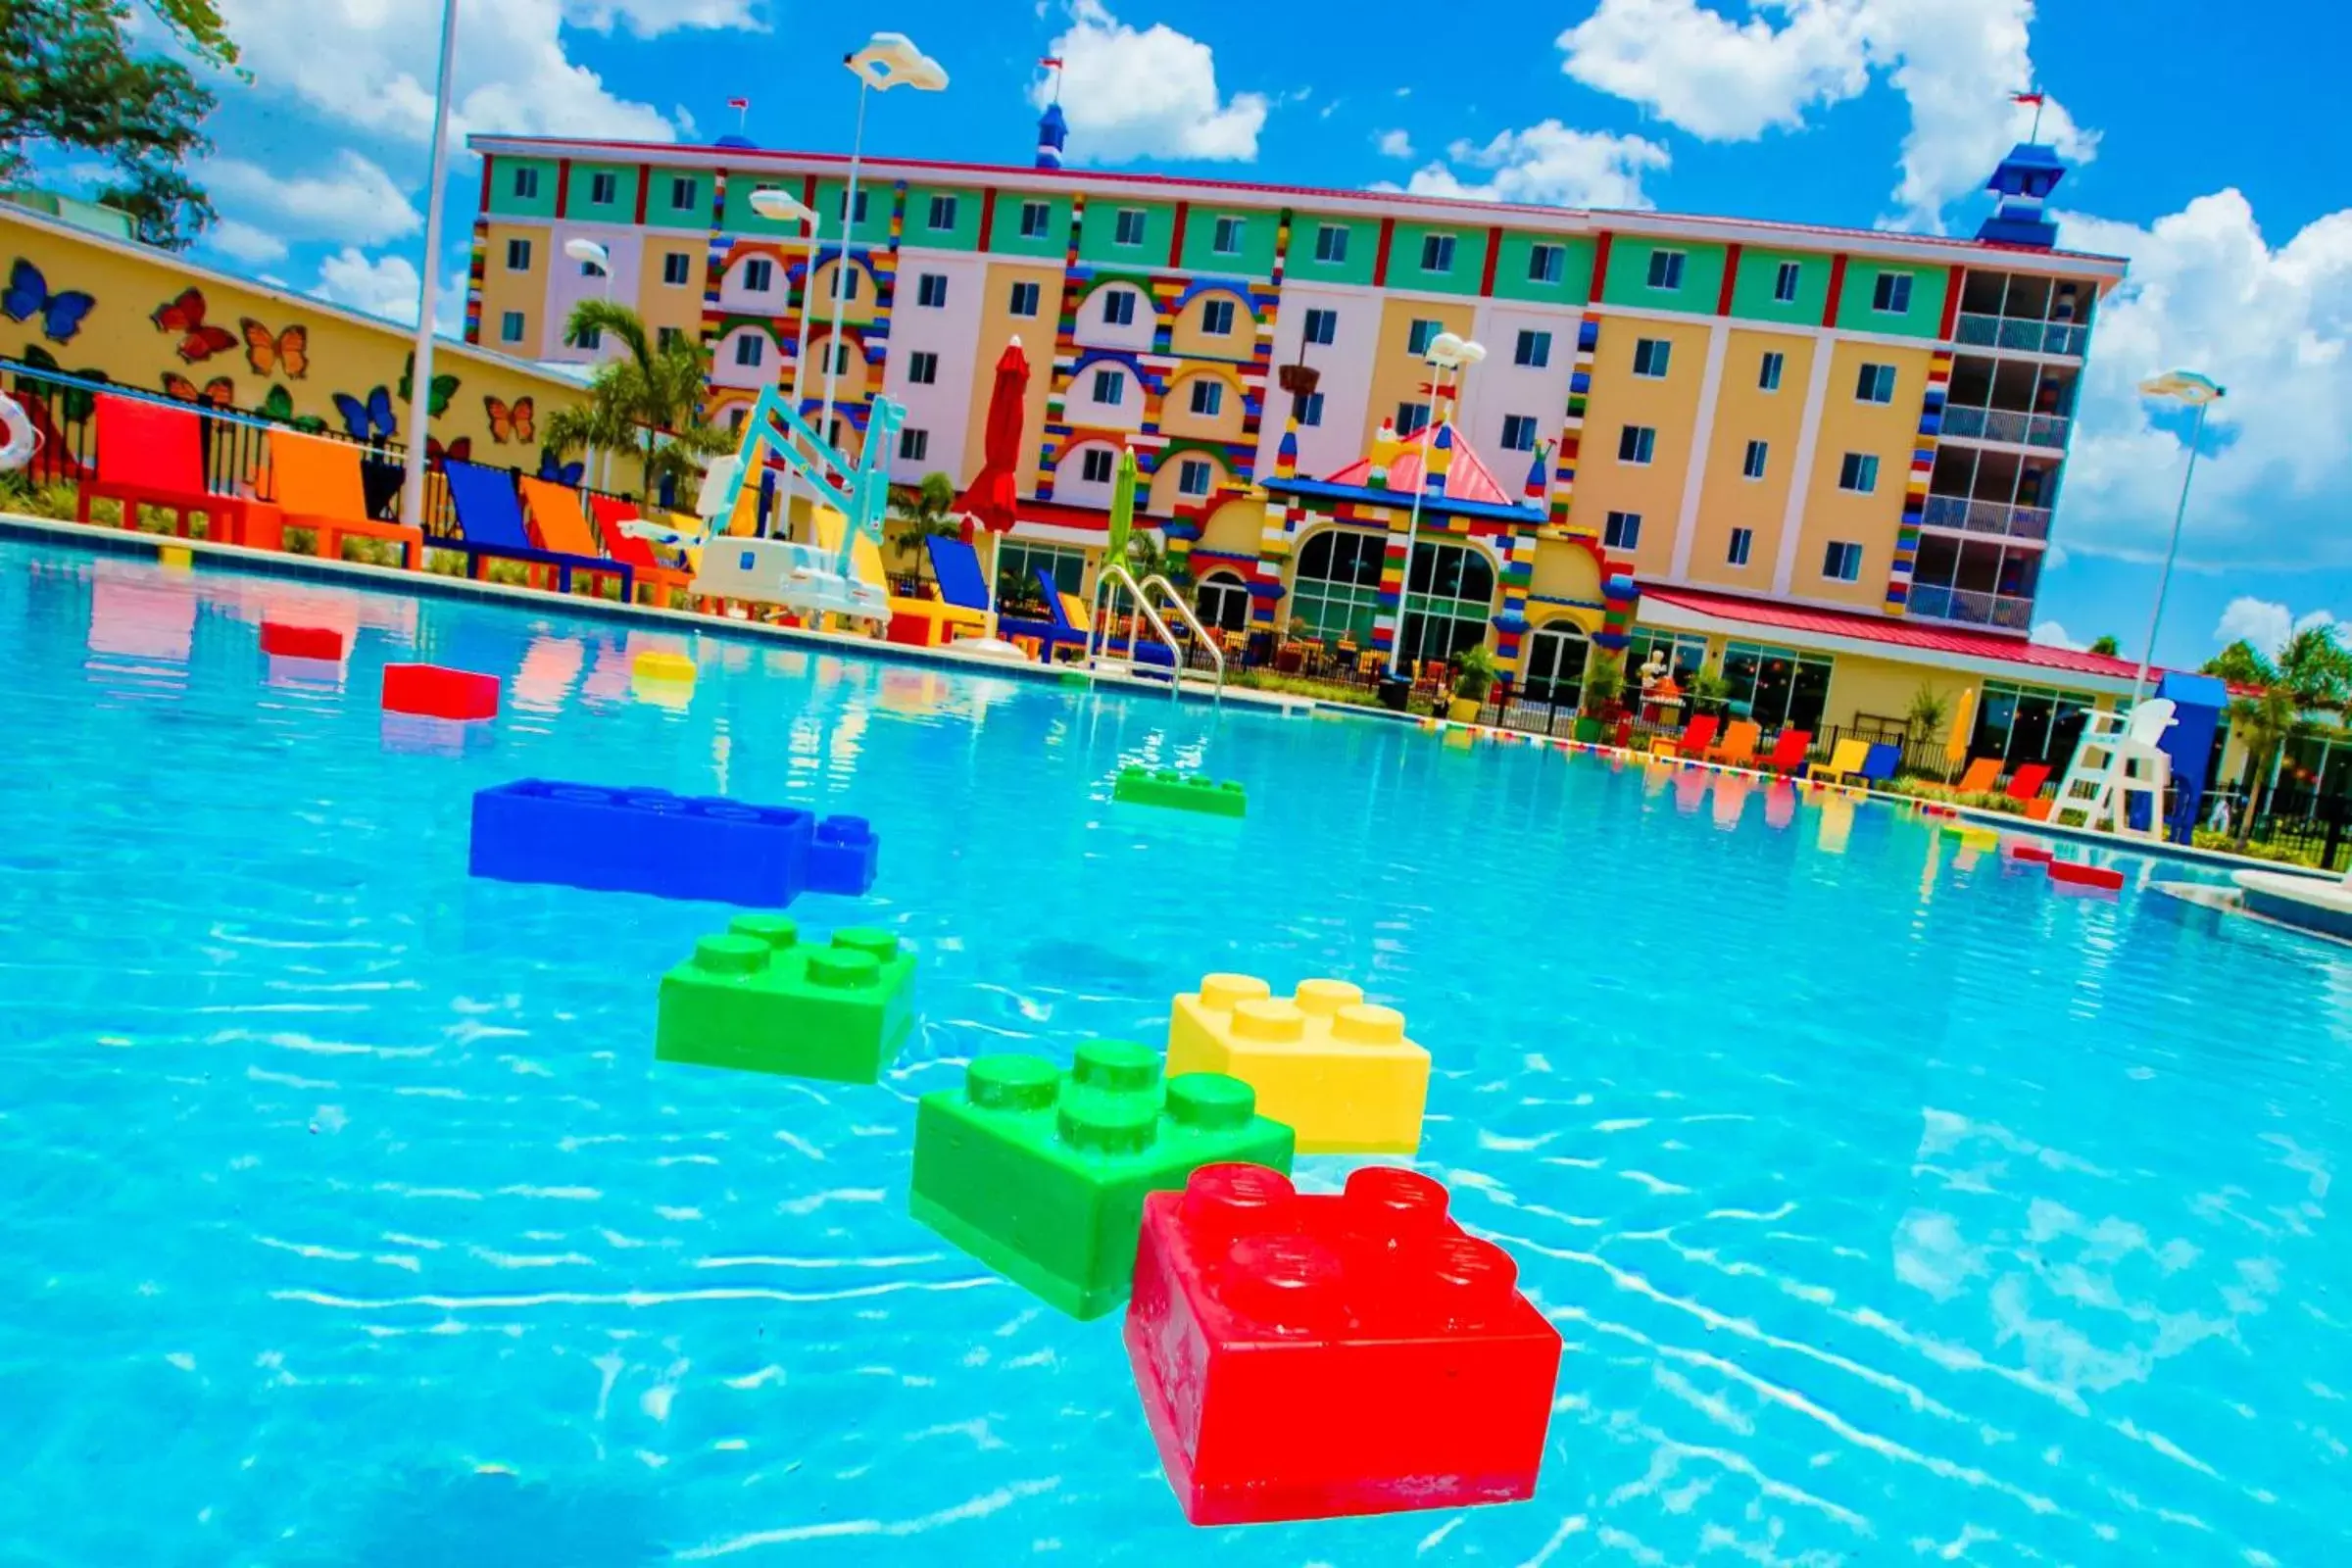 Day, Swimming Pool in LEGOLAND® Florida Resort